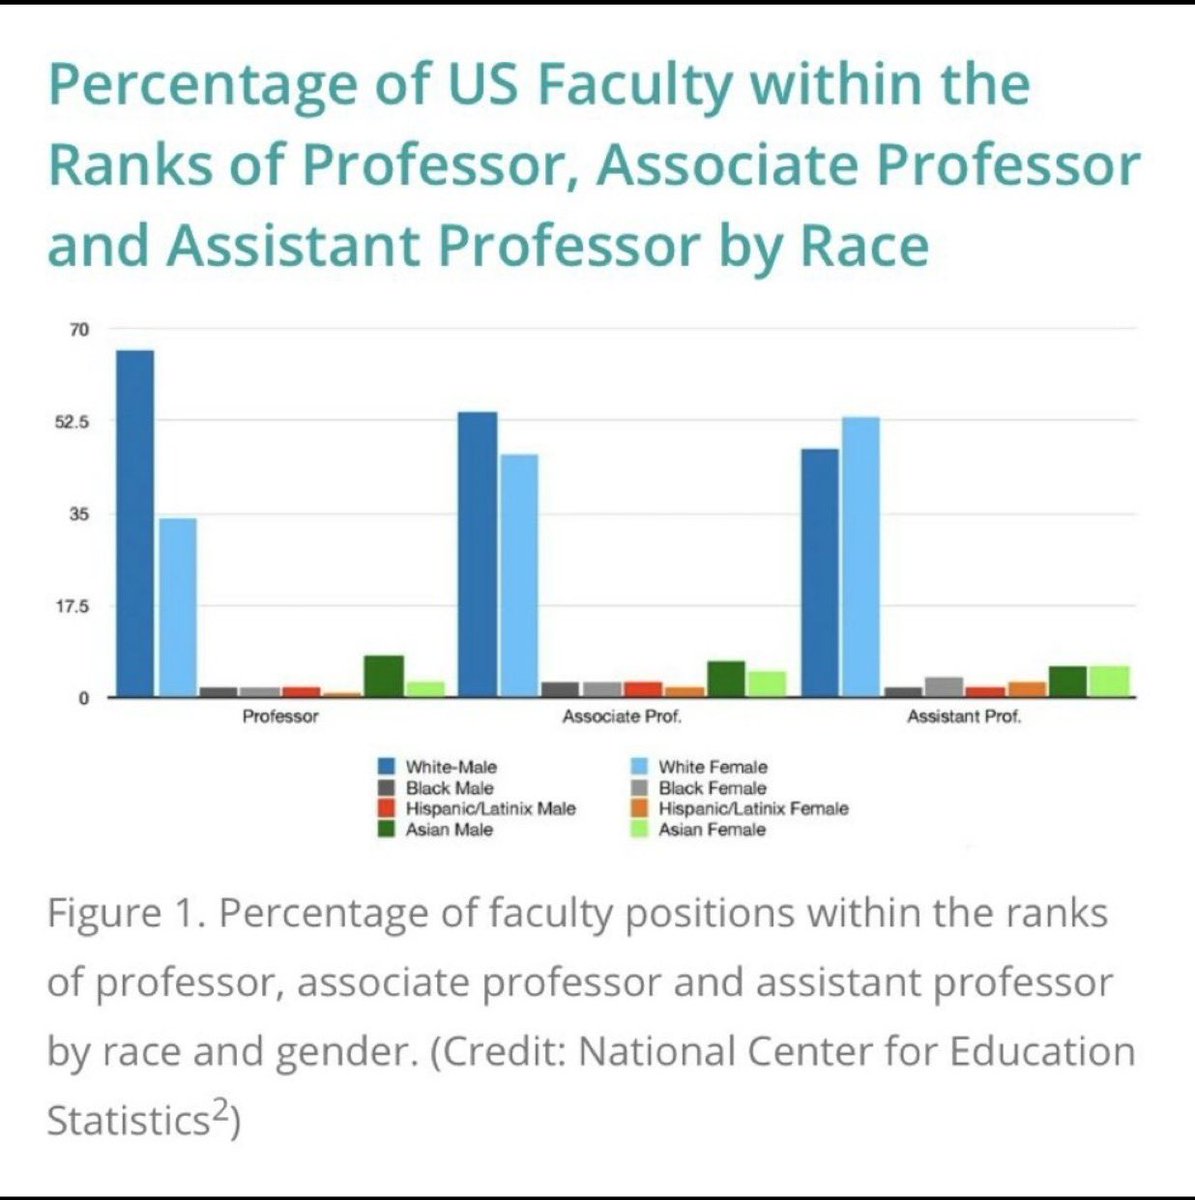 White male: White men can no longer find jobs in academia. Academia: